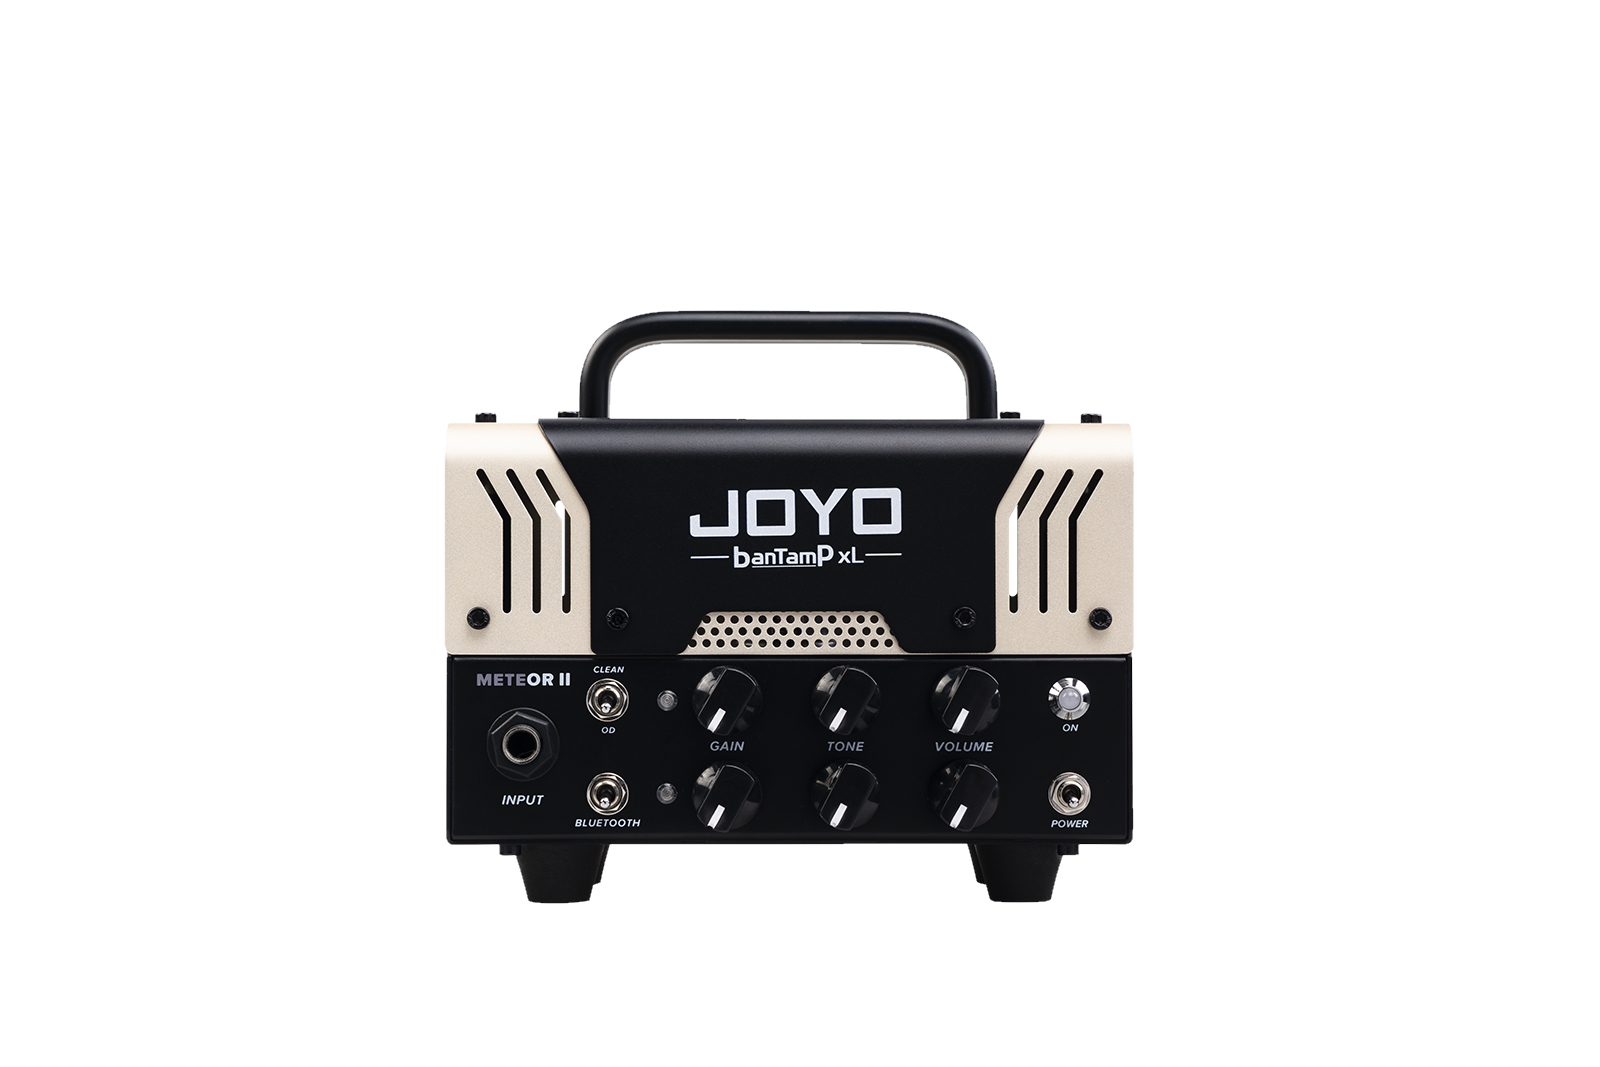 Гитарные усилители Joyo BanTamP XL METEOR-II гитарные усилители tc electronic jims 45 preamp